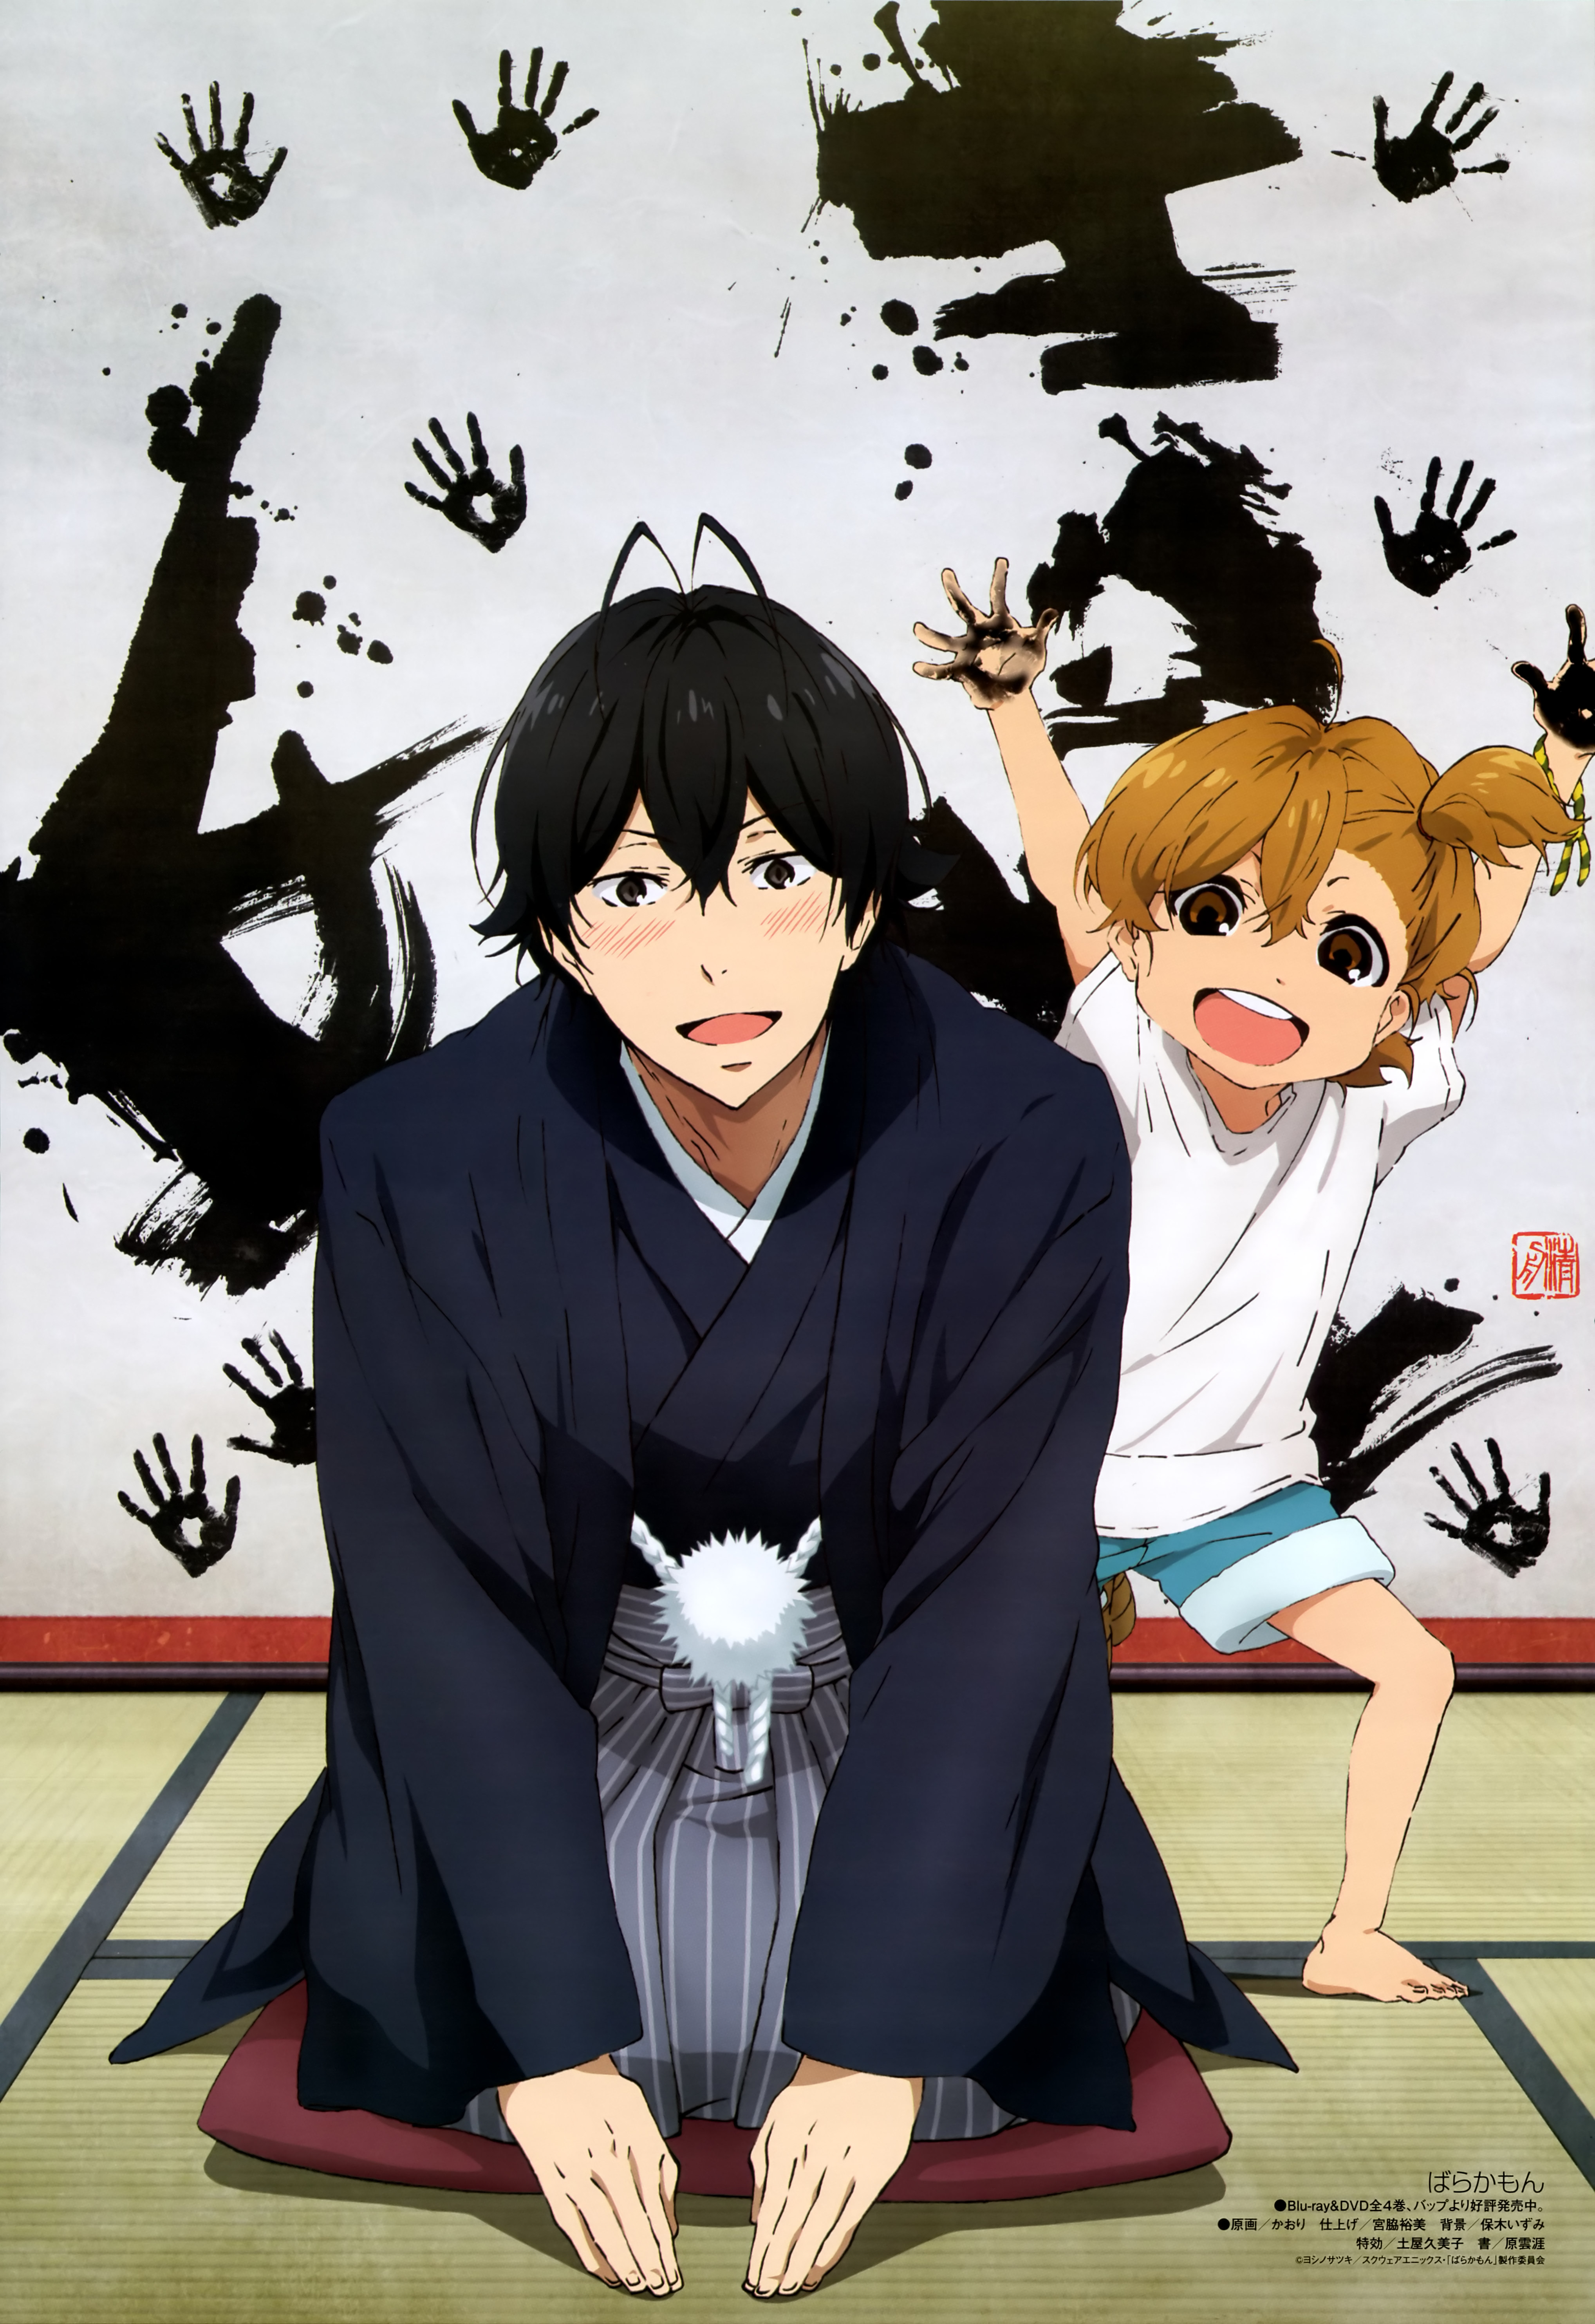 Handa kun and Barakamon | Anime Amino